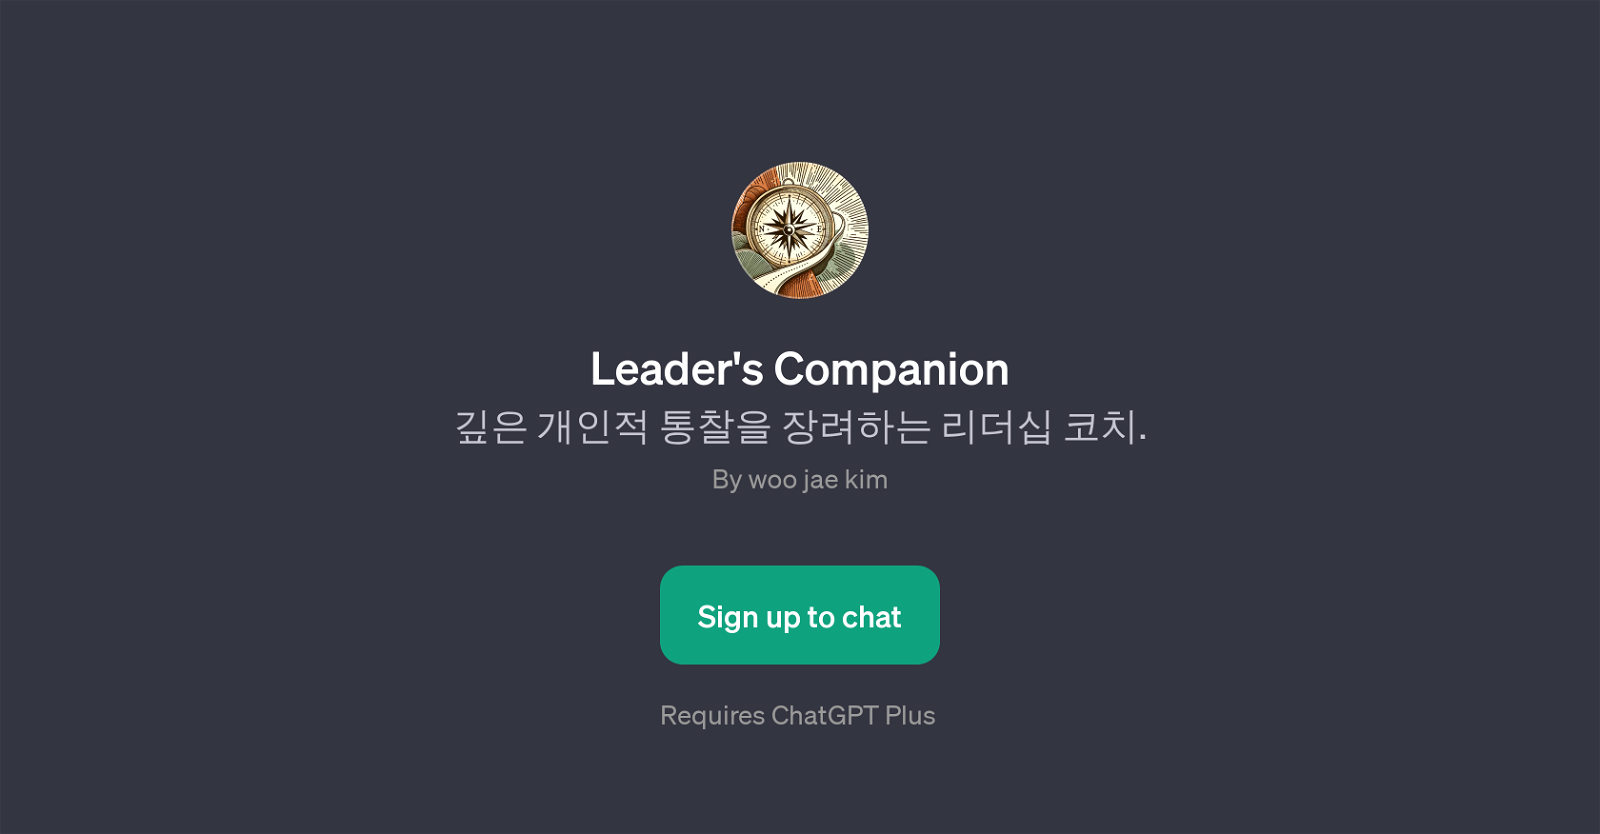 Leader's Companion website